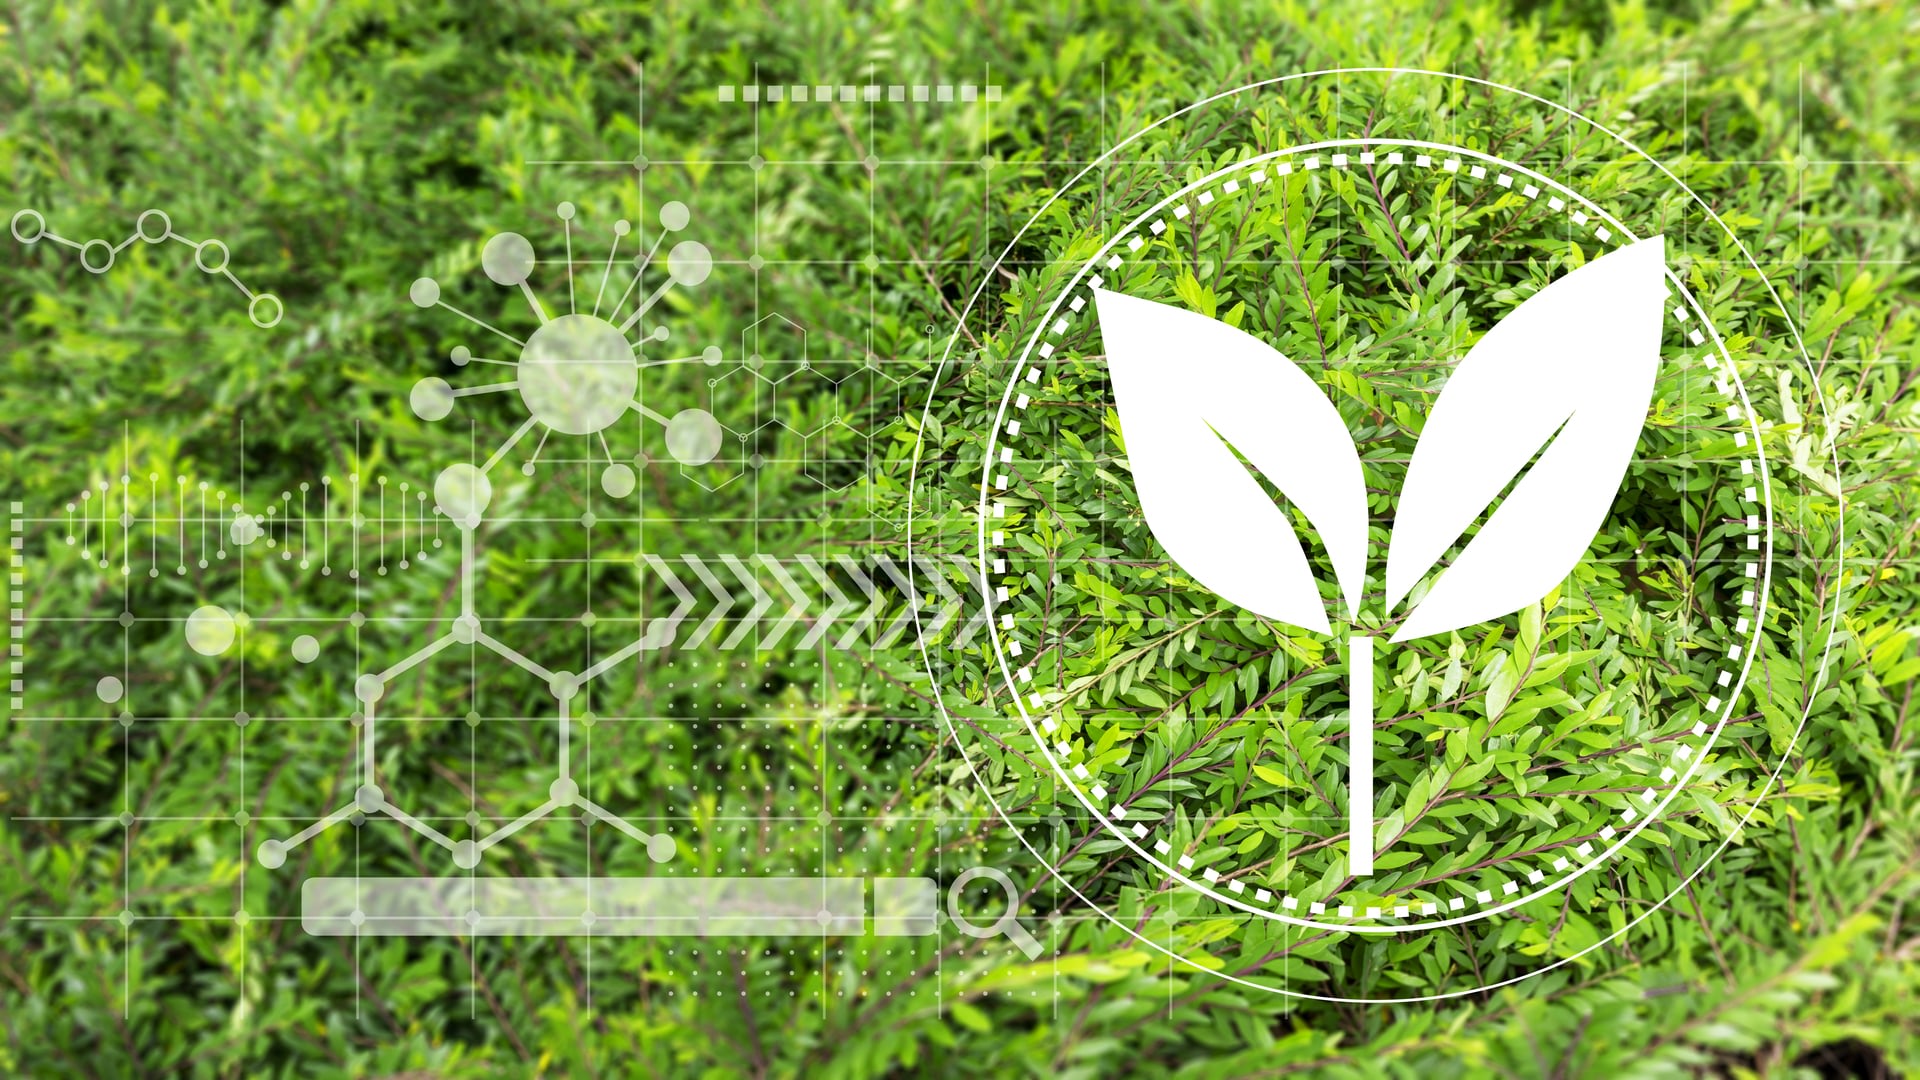 KnowESG_Rainforest Rescue, Hexagon's Digital Solution